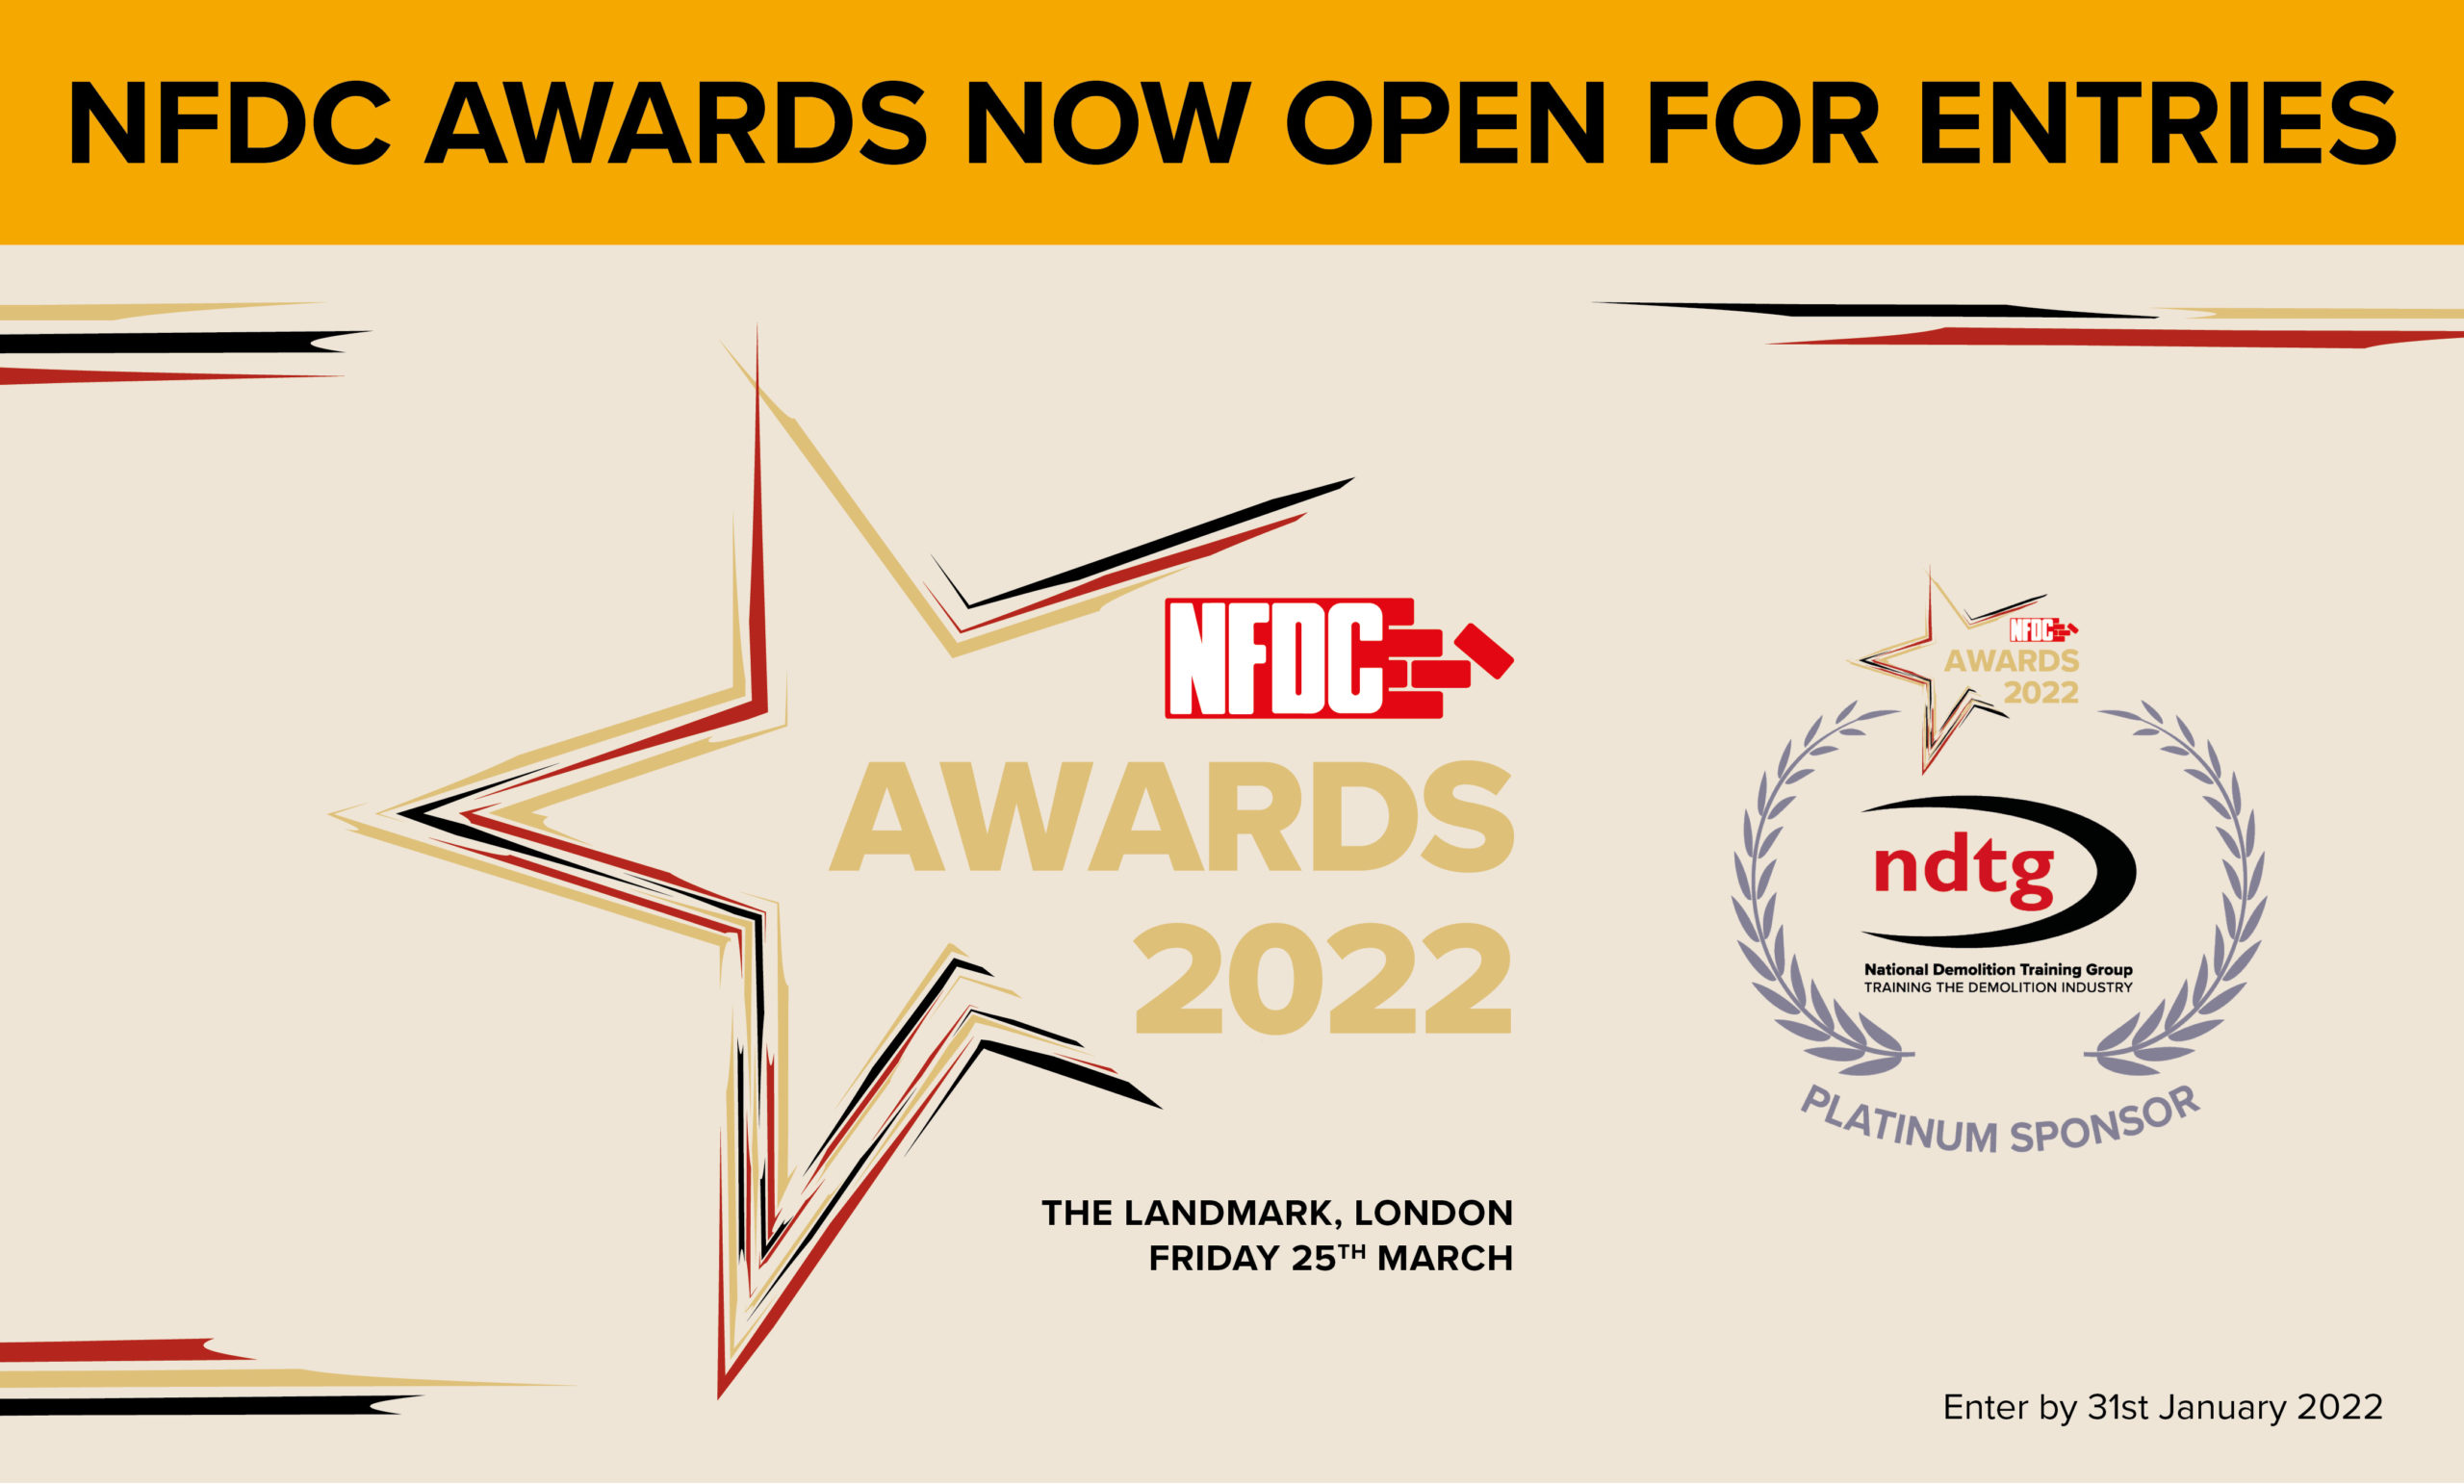 NDTG is Platinum Sponsor for NFDC Awards 2022